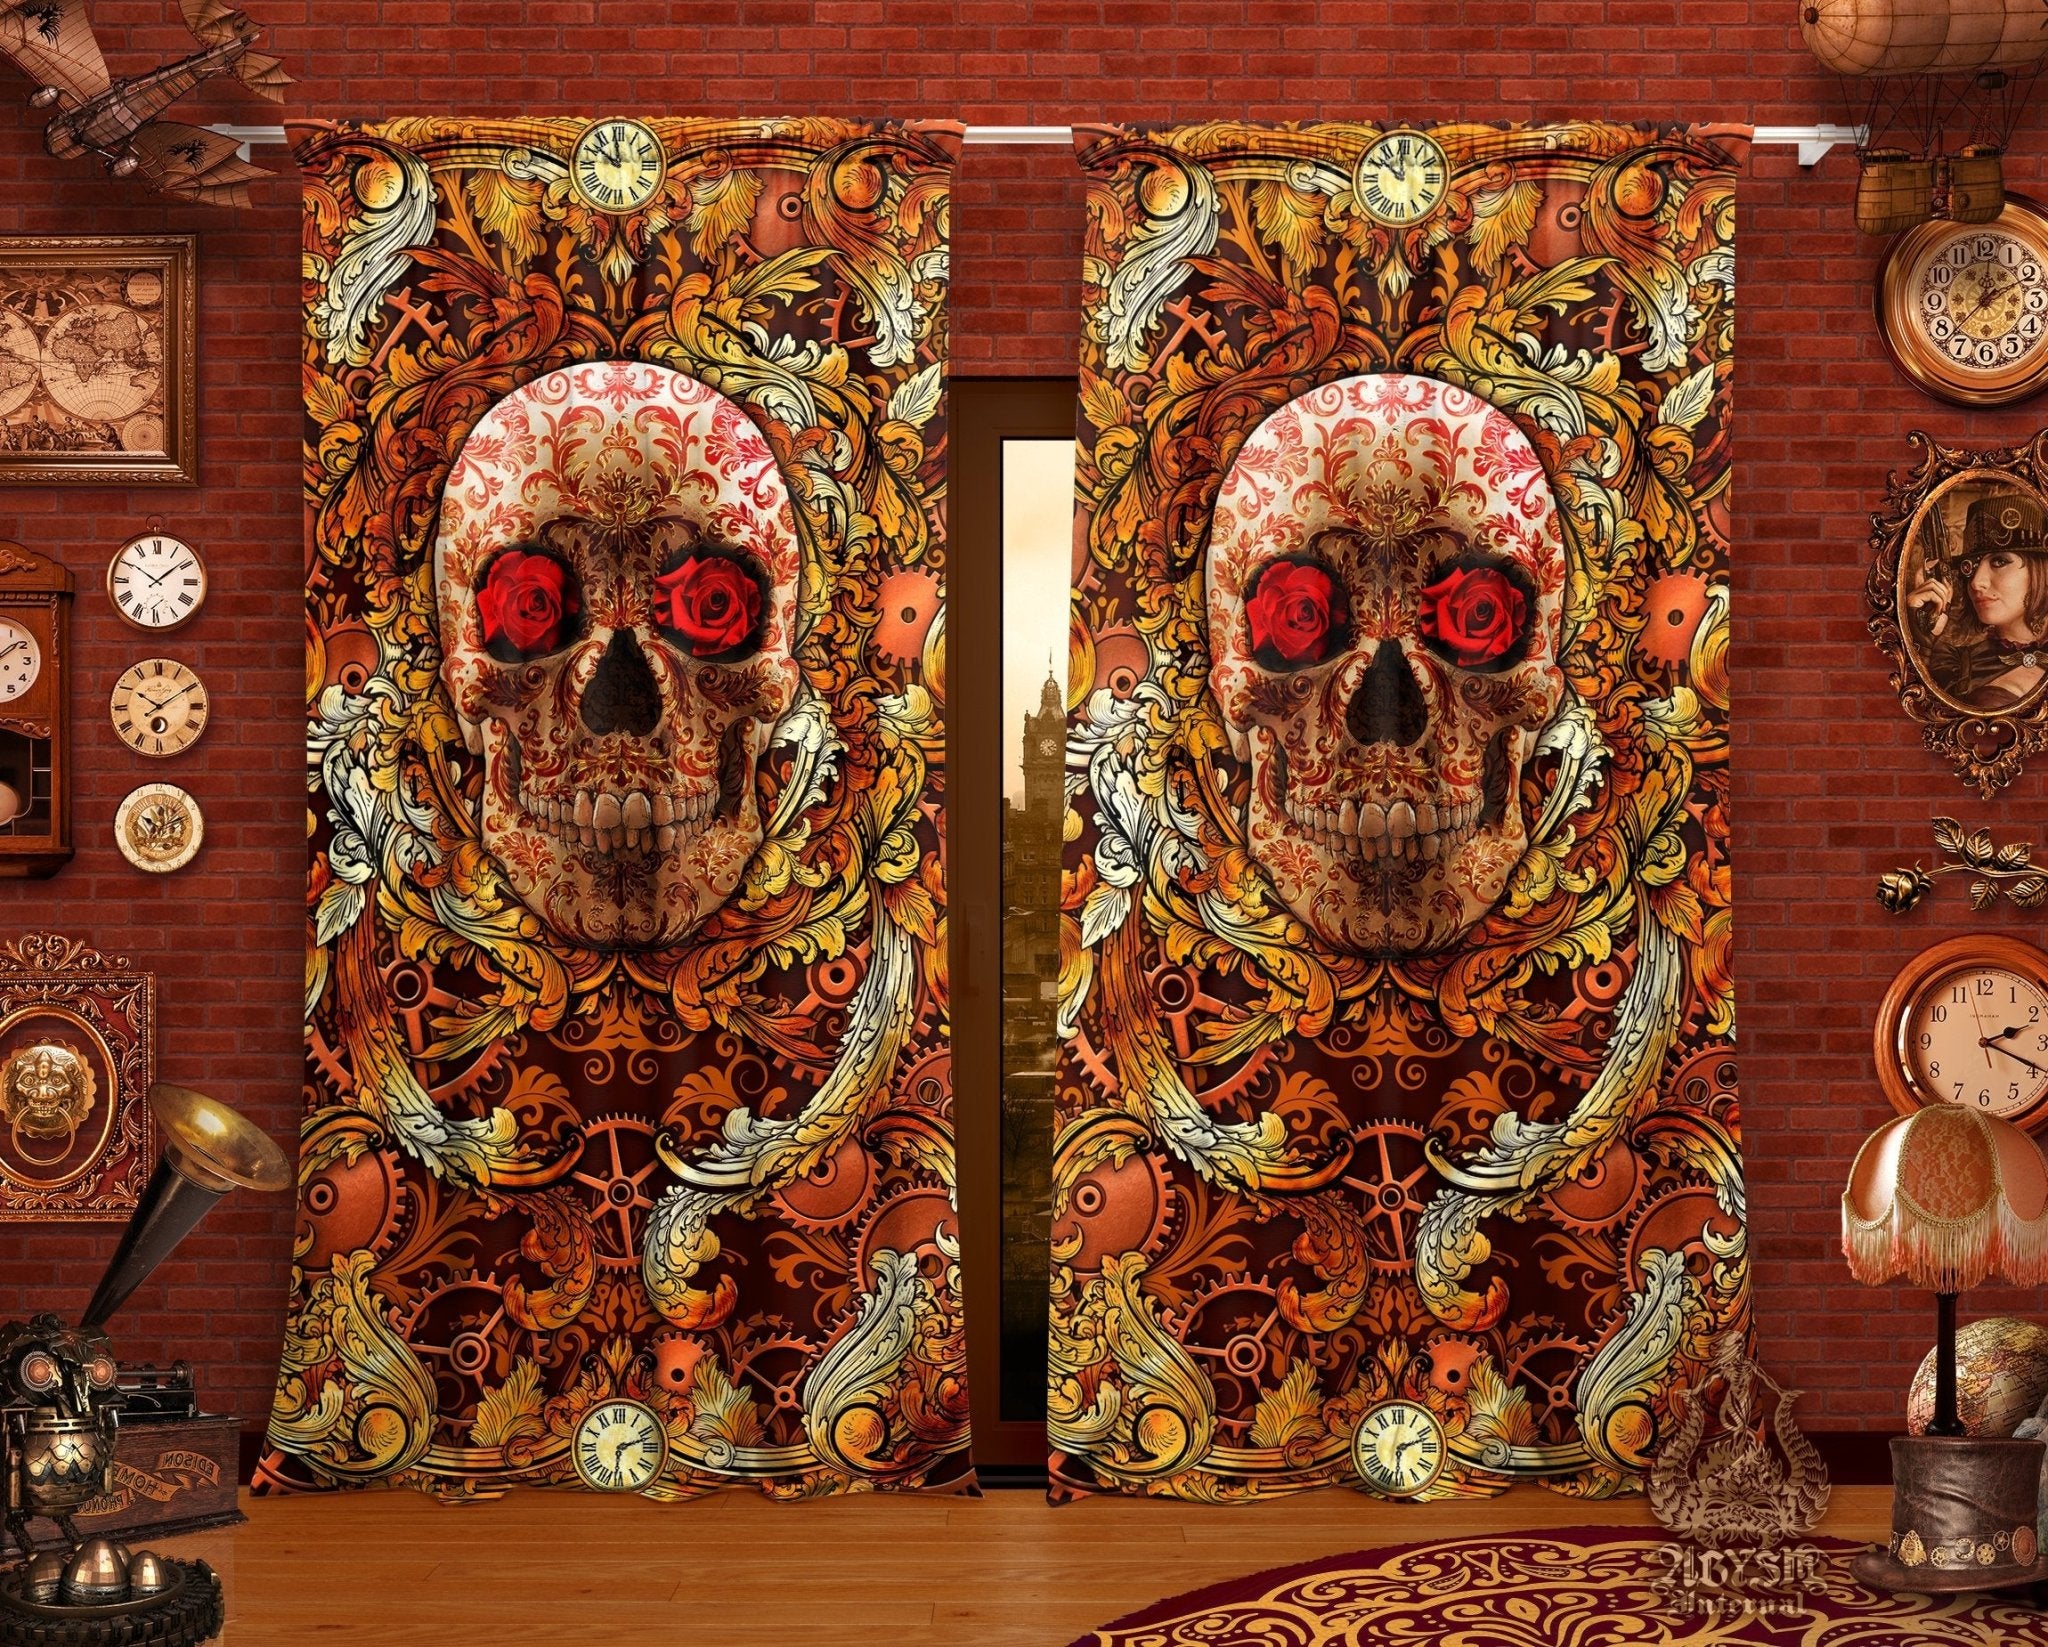 Steampunk Blackout Curtains, Long Window Panels, Skull Room Decor - Abysm Internal